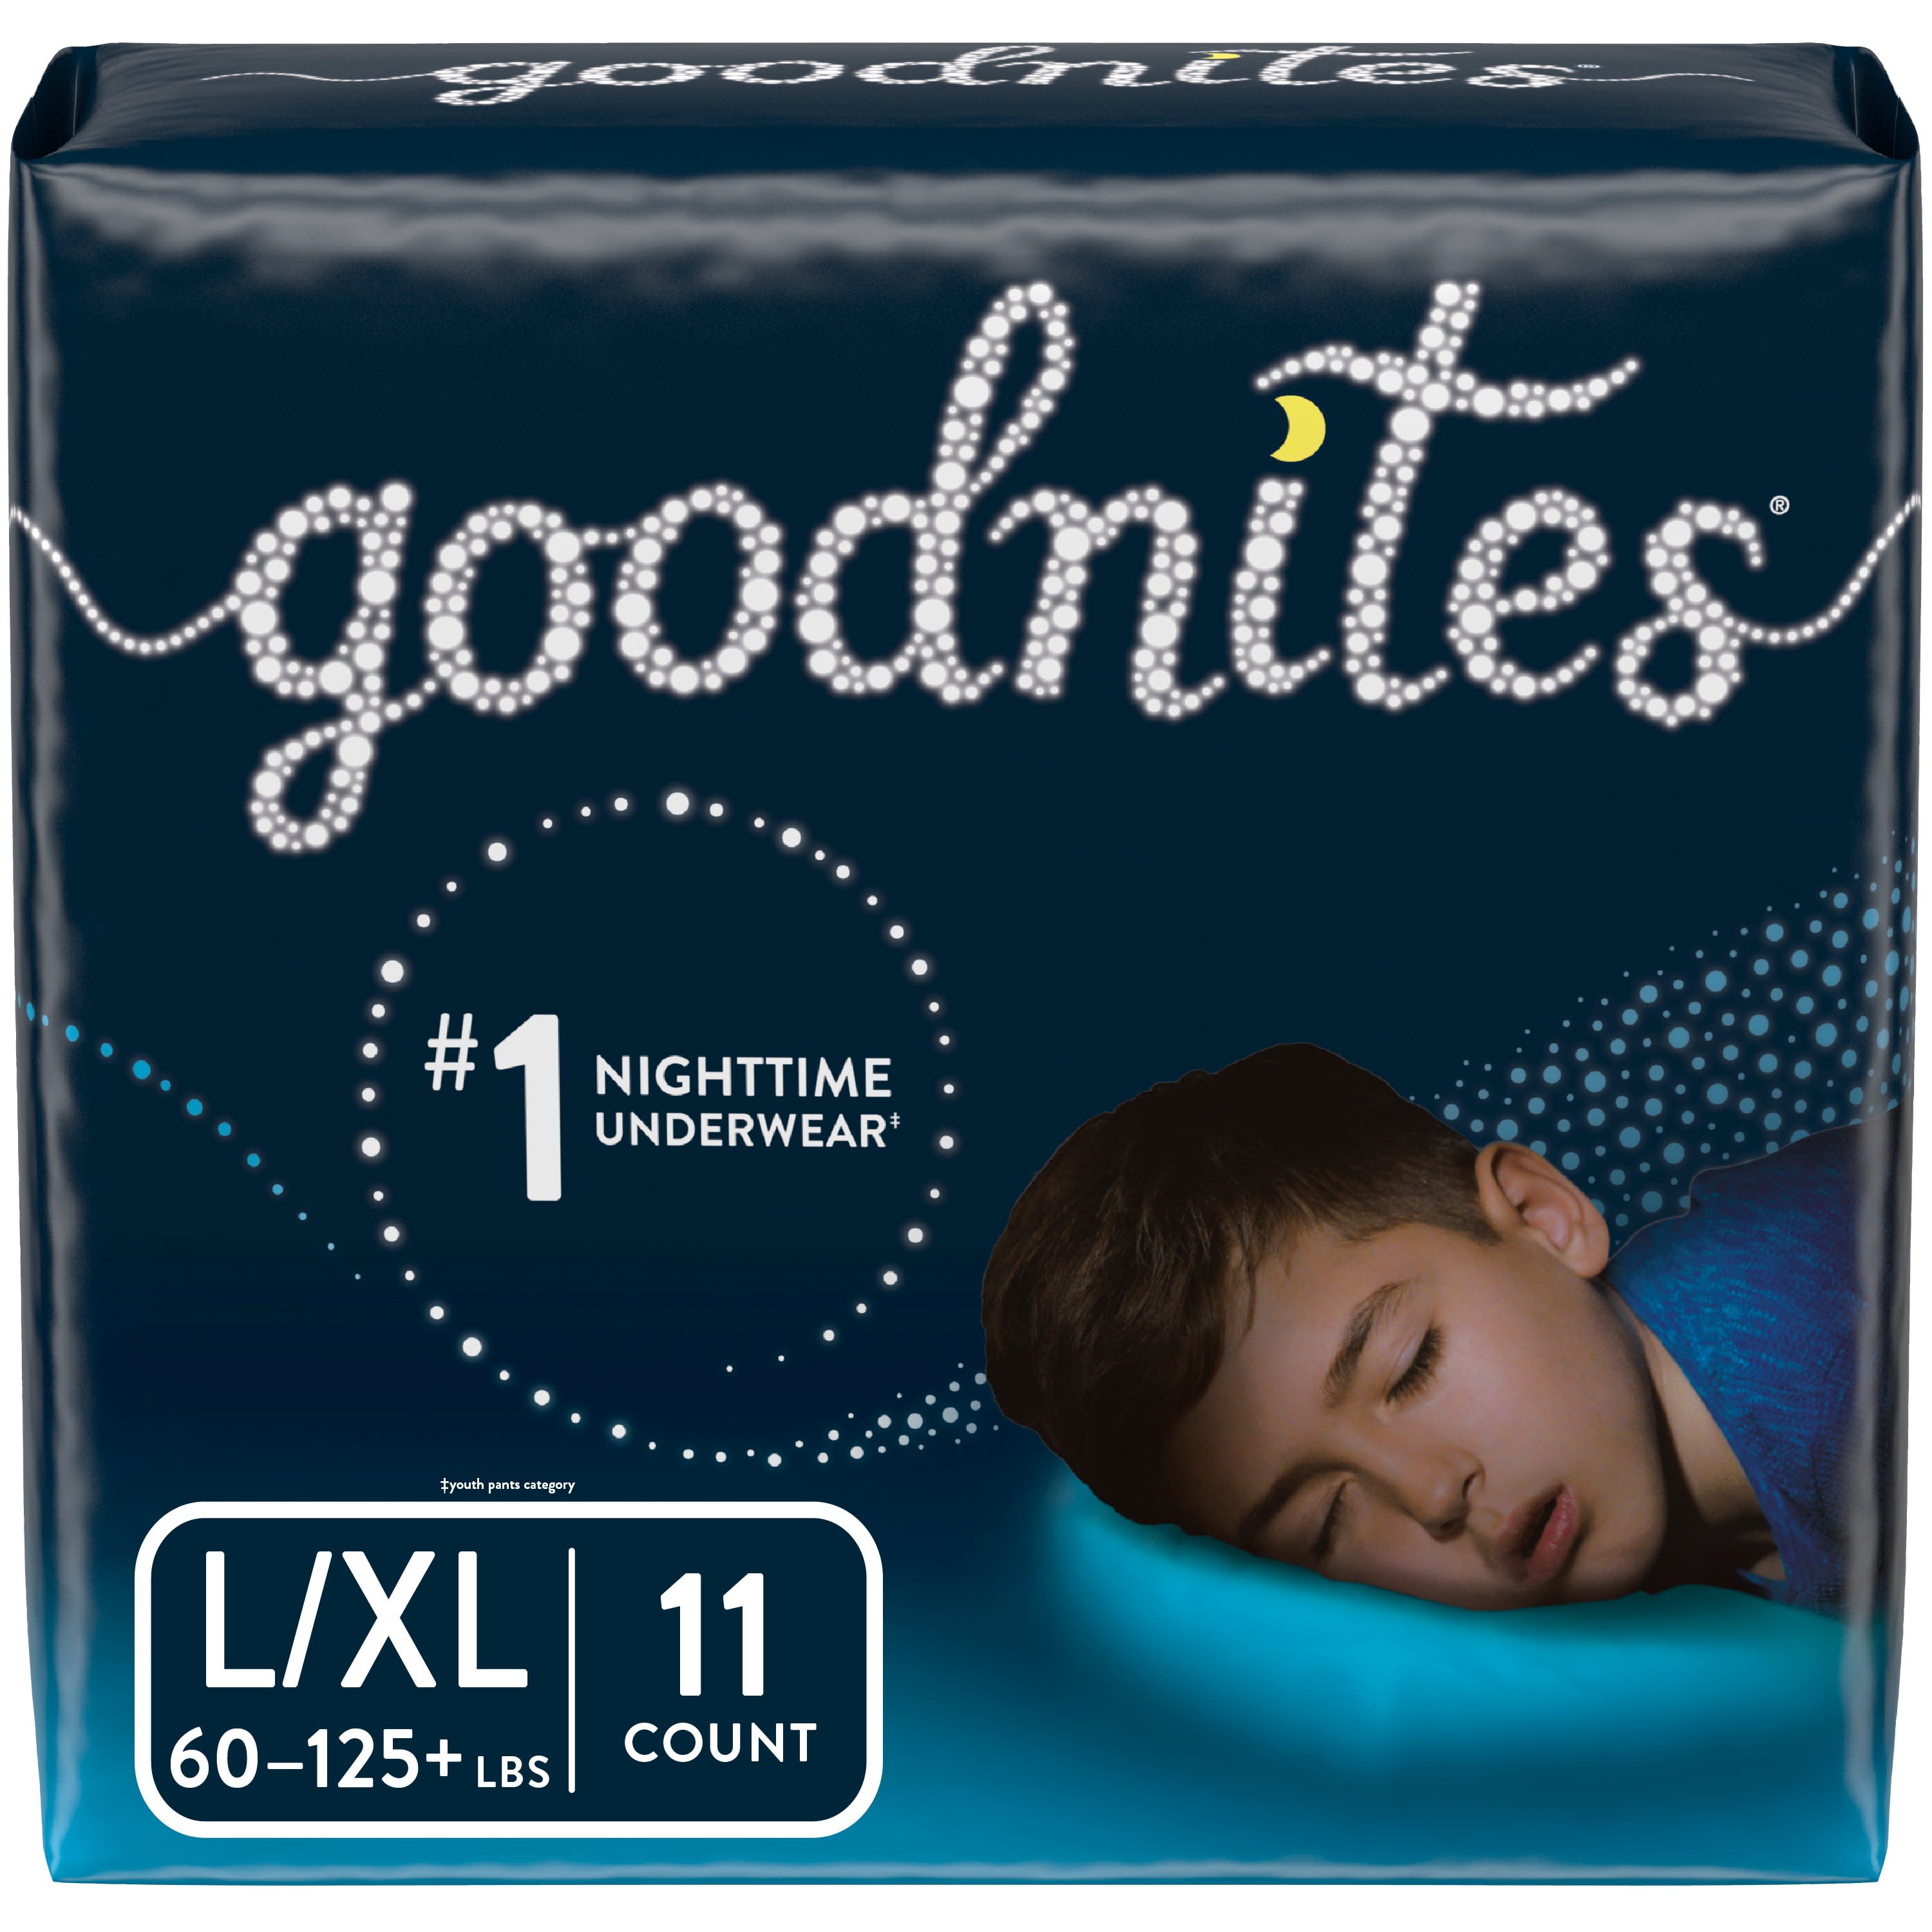 Goodnites Boys' Bedwetting Underwear, L/XL, 11 Ct - image 1 of 11